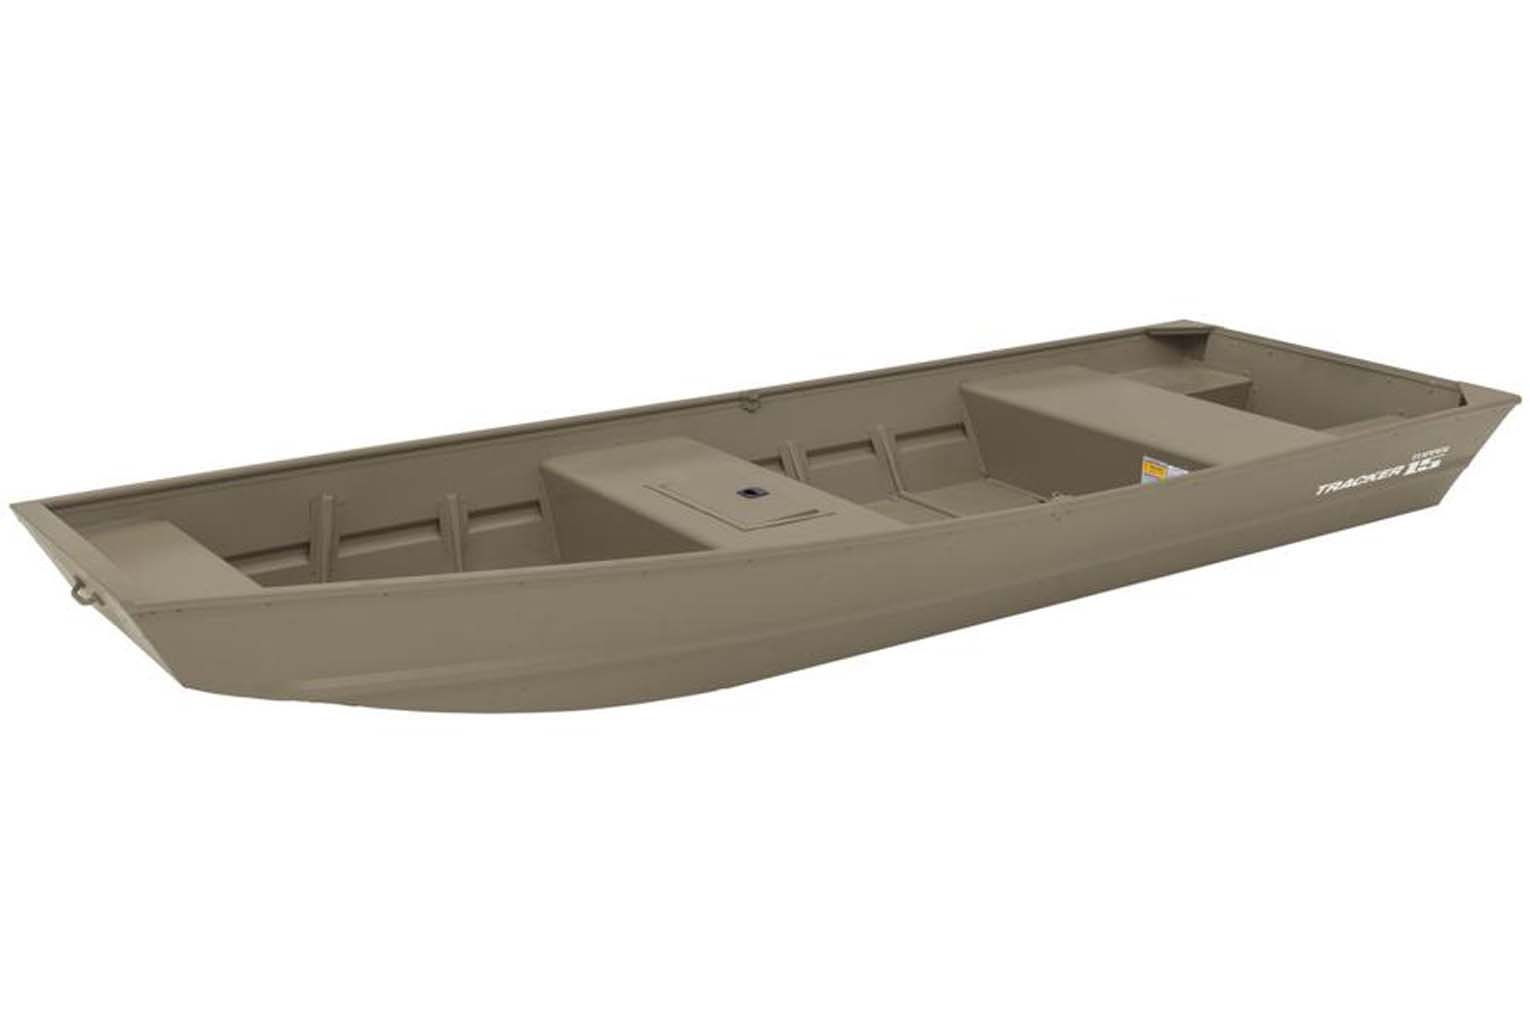 Tracker Topper 1542 catalog buy models yachts sailboats motorboats new used...